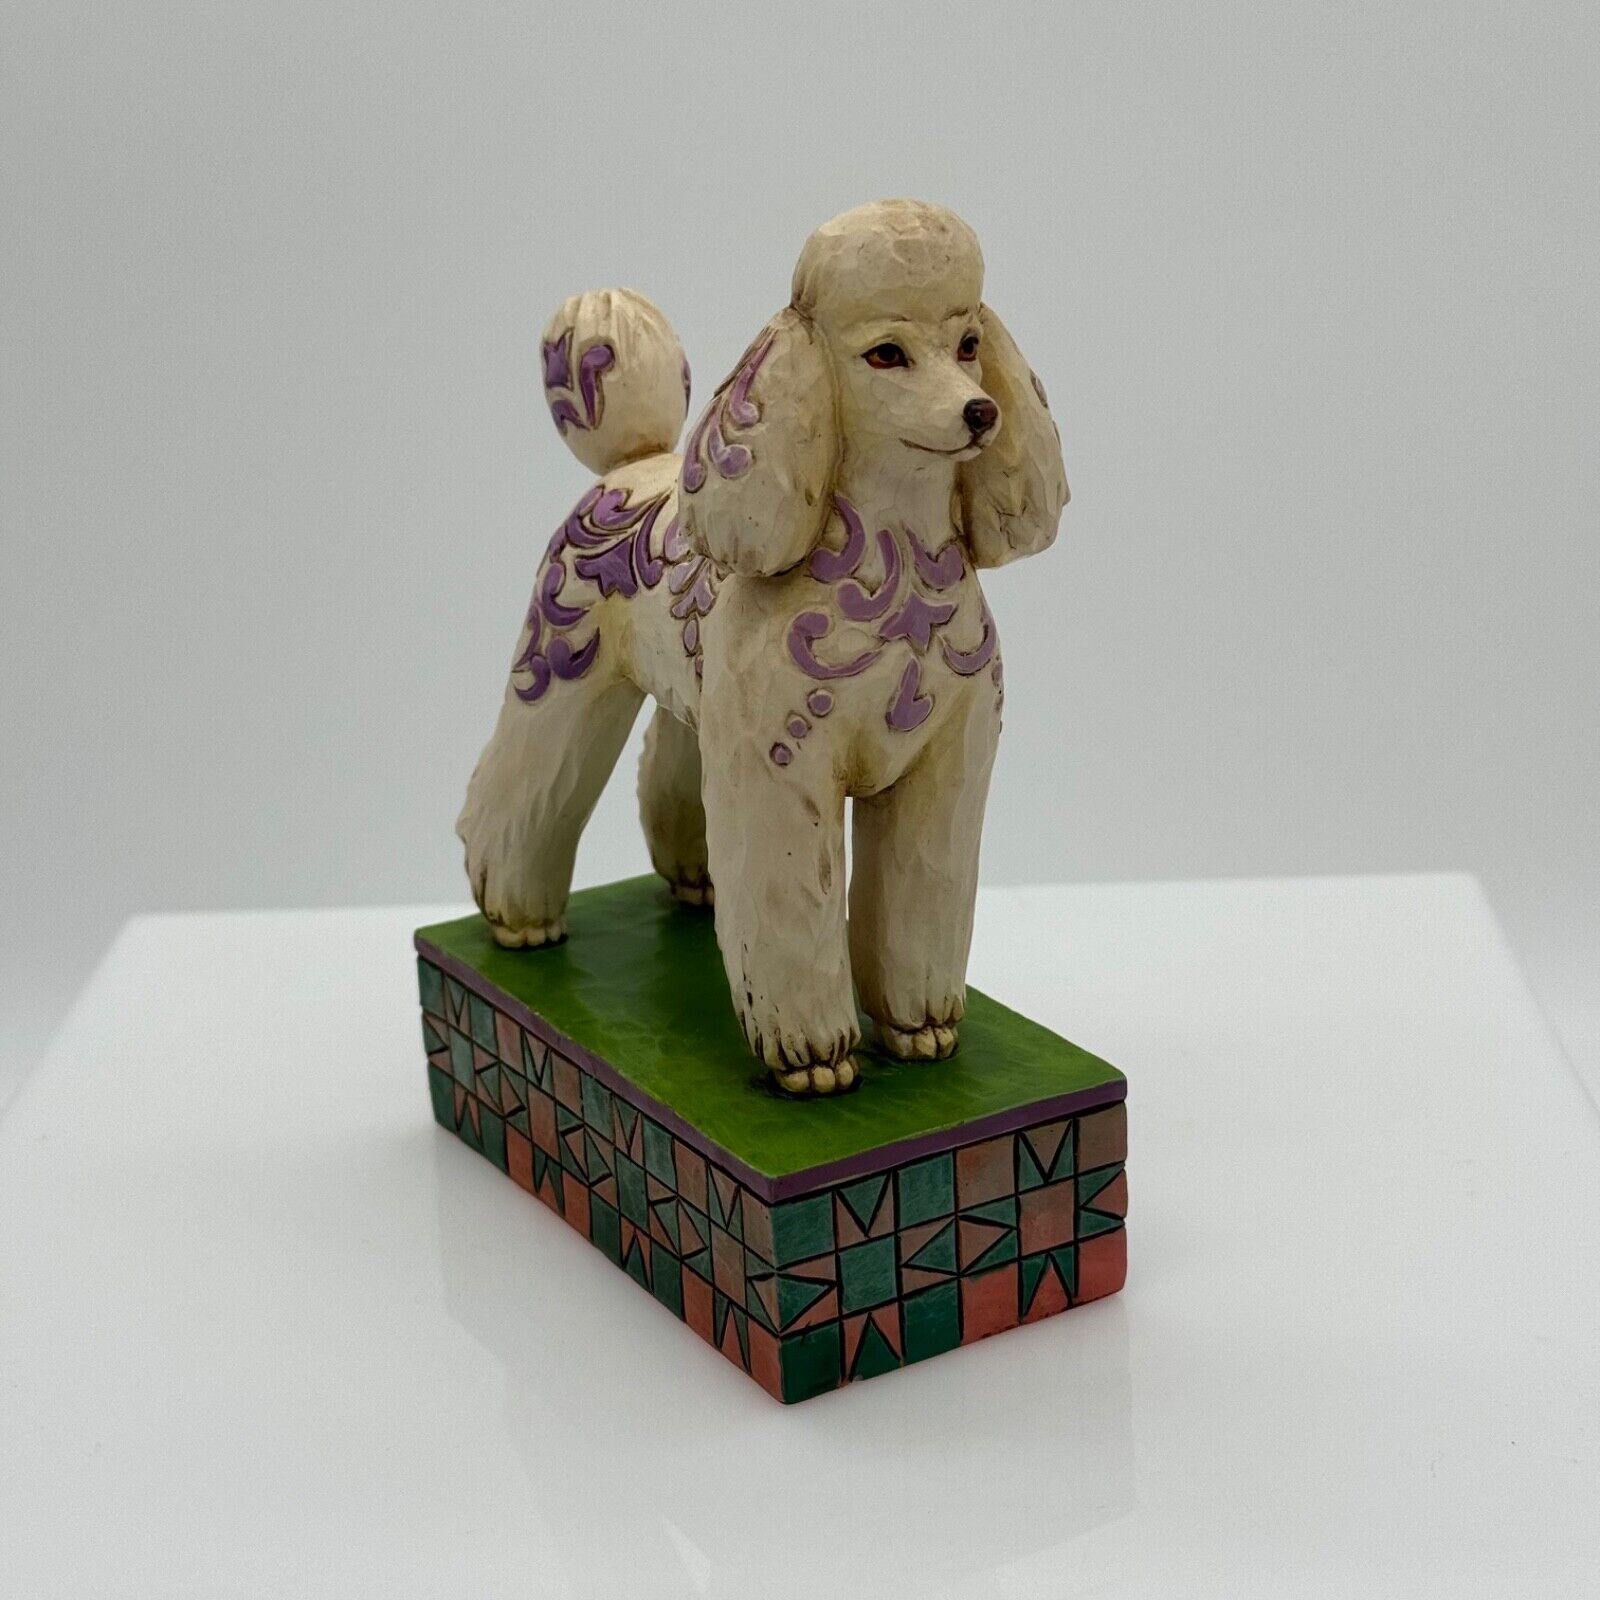 2011 Jim Shore Heartwood Creek “Genevieve” Poodle Figurine #4025832